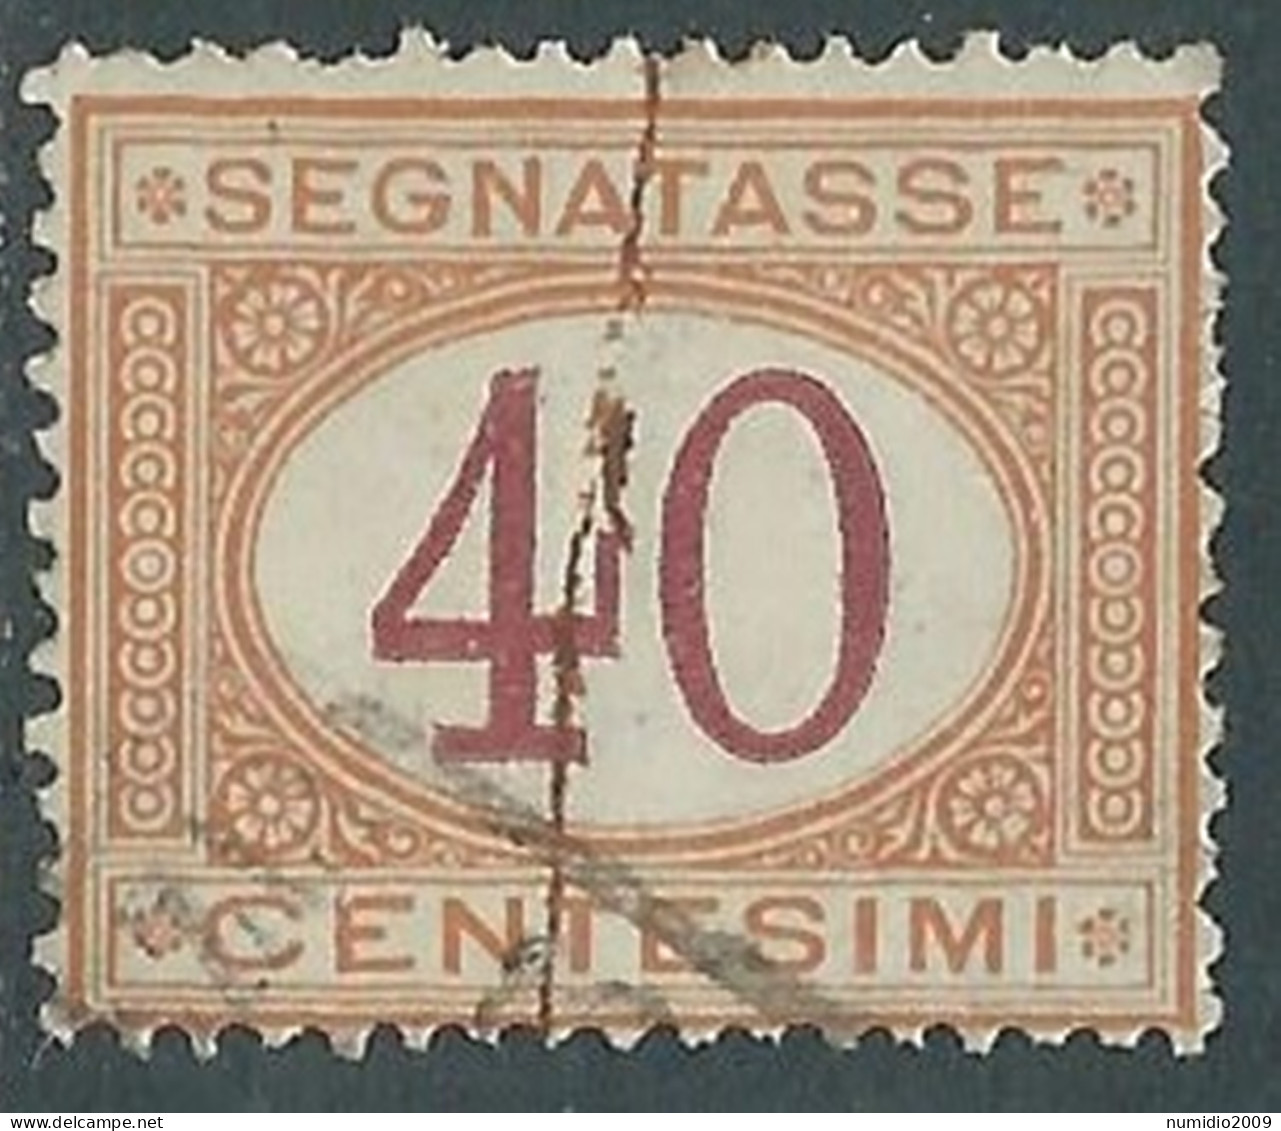 1890-94 REGNO SEGNATASSE USATO 40 CENT VARIETà RIGA COLORE - RC33 - Segnatasse